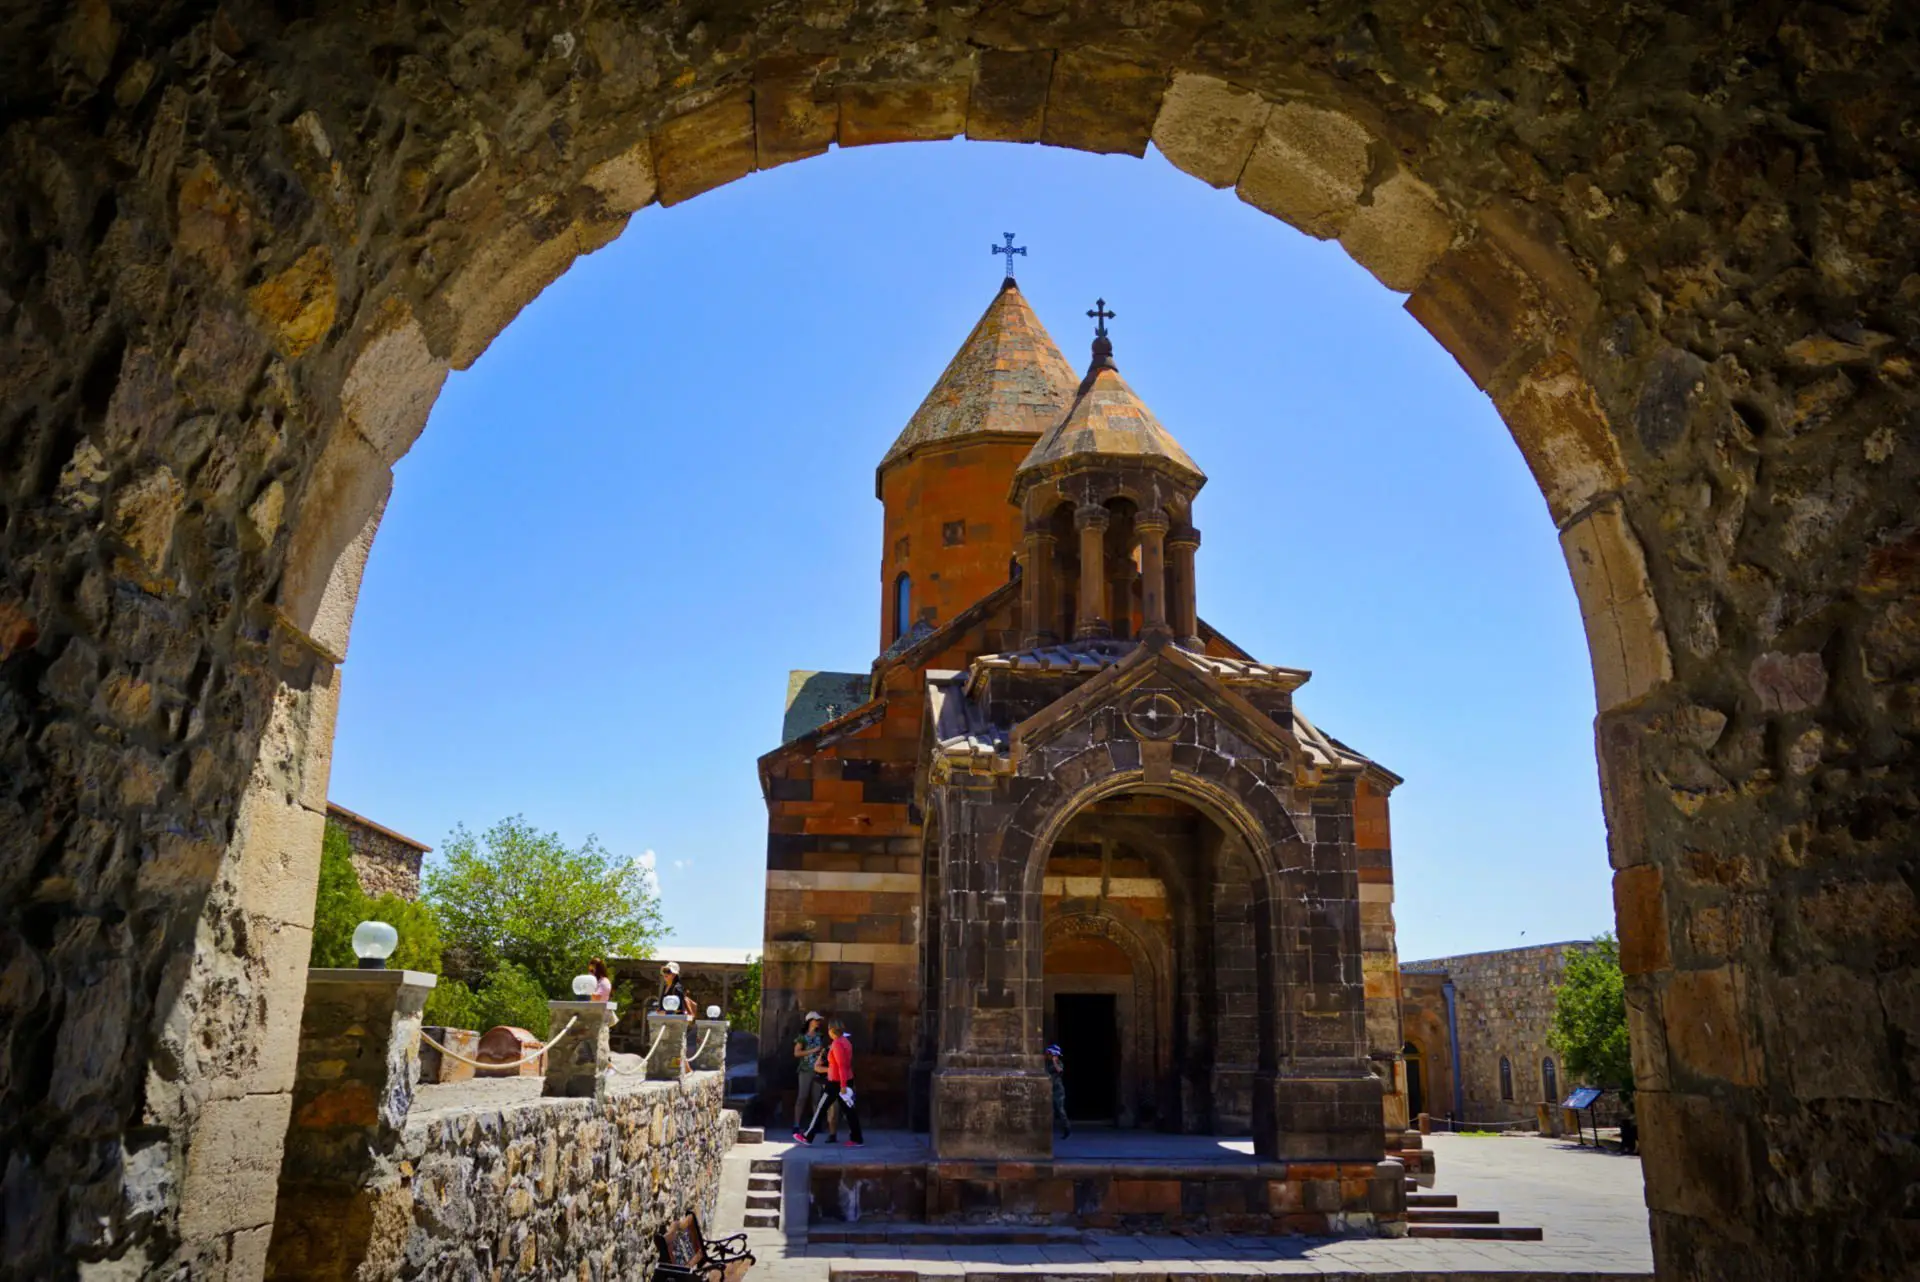 Khor Virap, Armenia - Experiencing the Globe